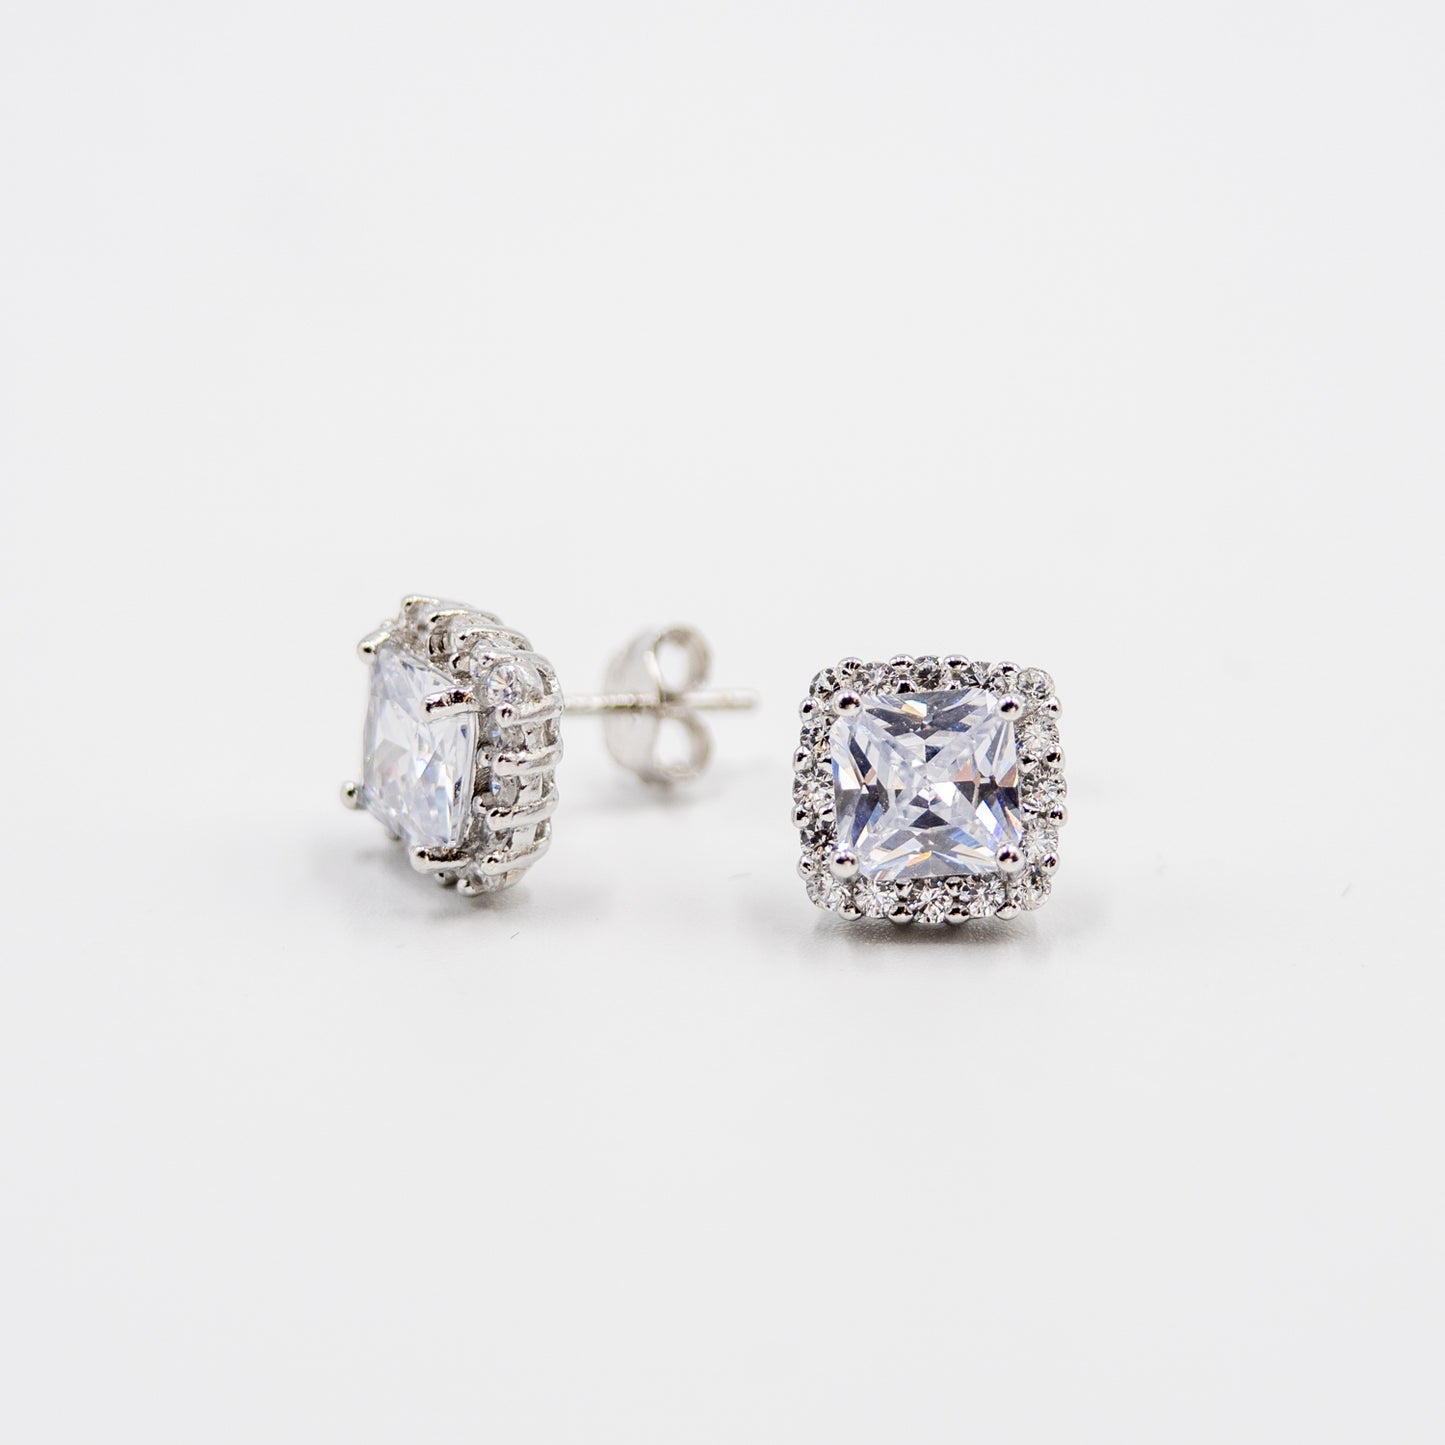 DK-925-186 sterling silver square earrings